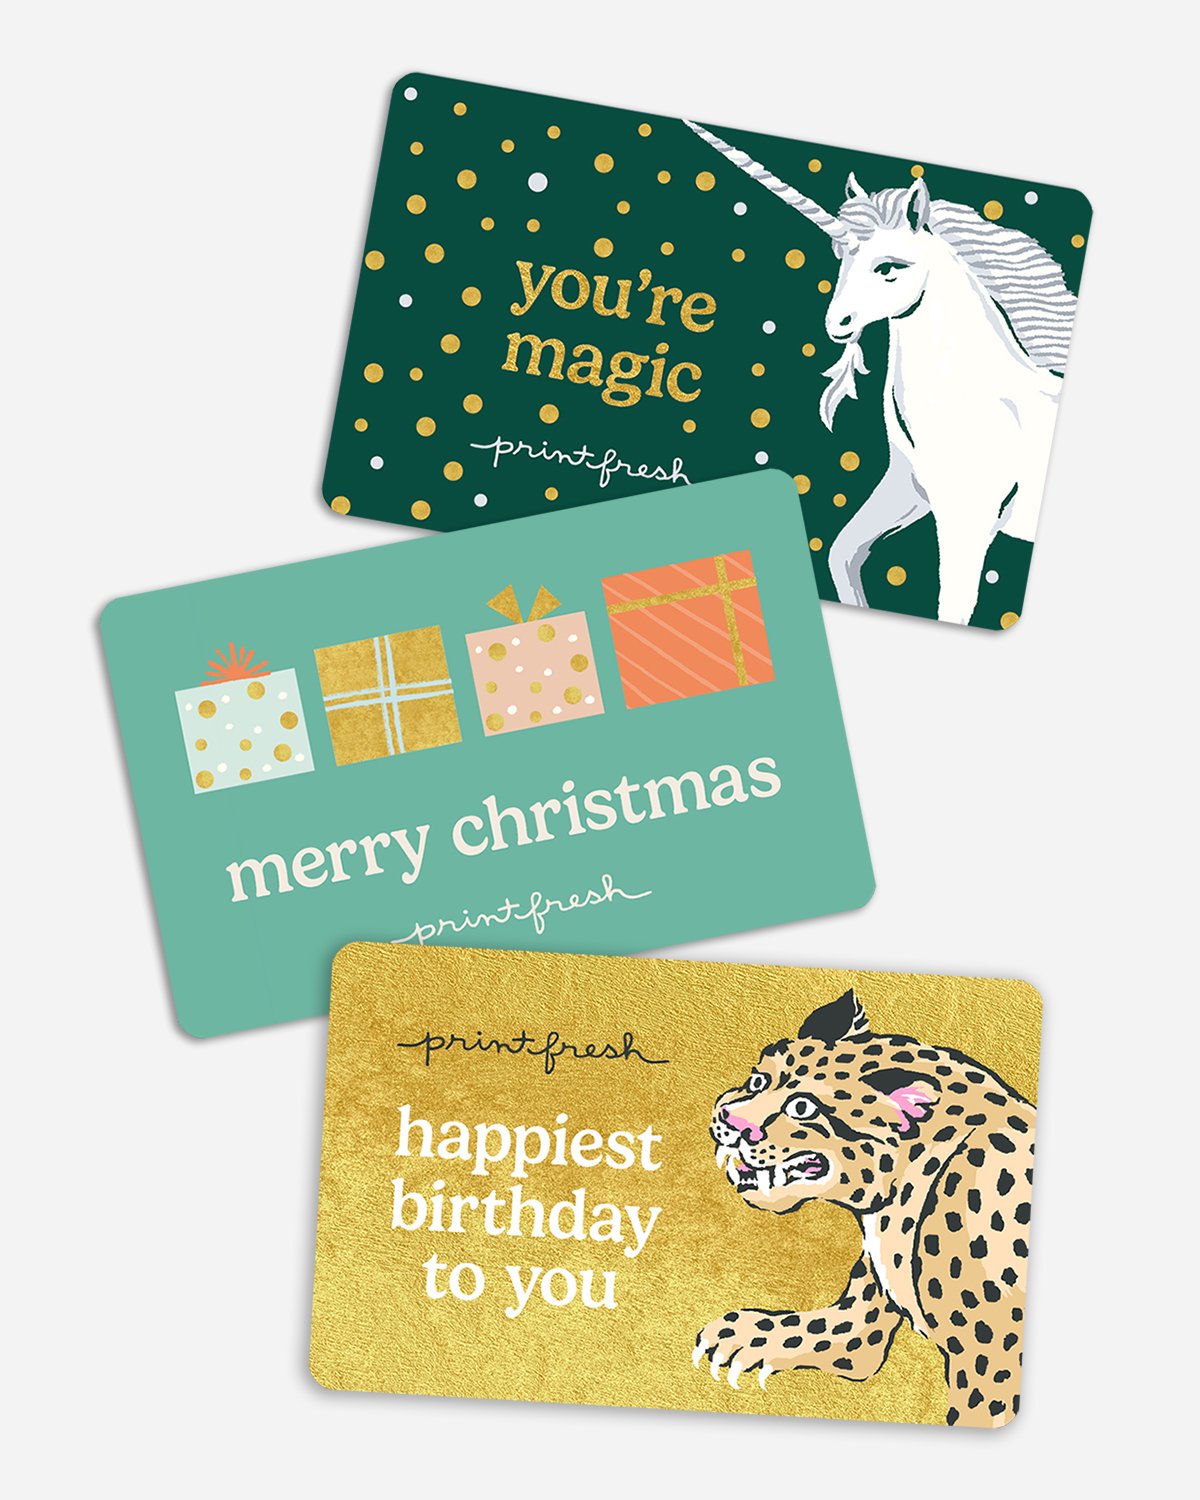 $25 E-Gift Card - Code Will be Sent 12/20 - Printfresh